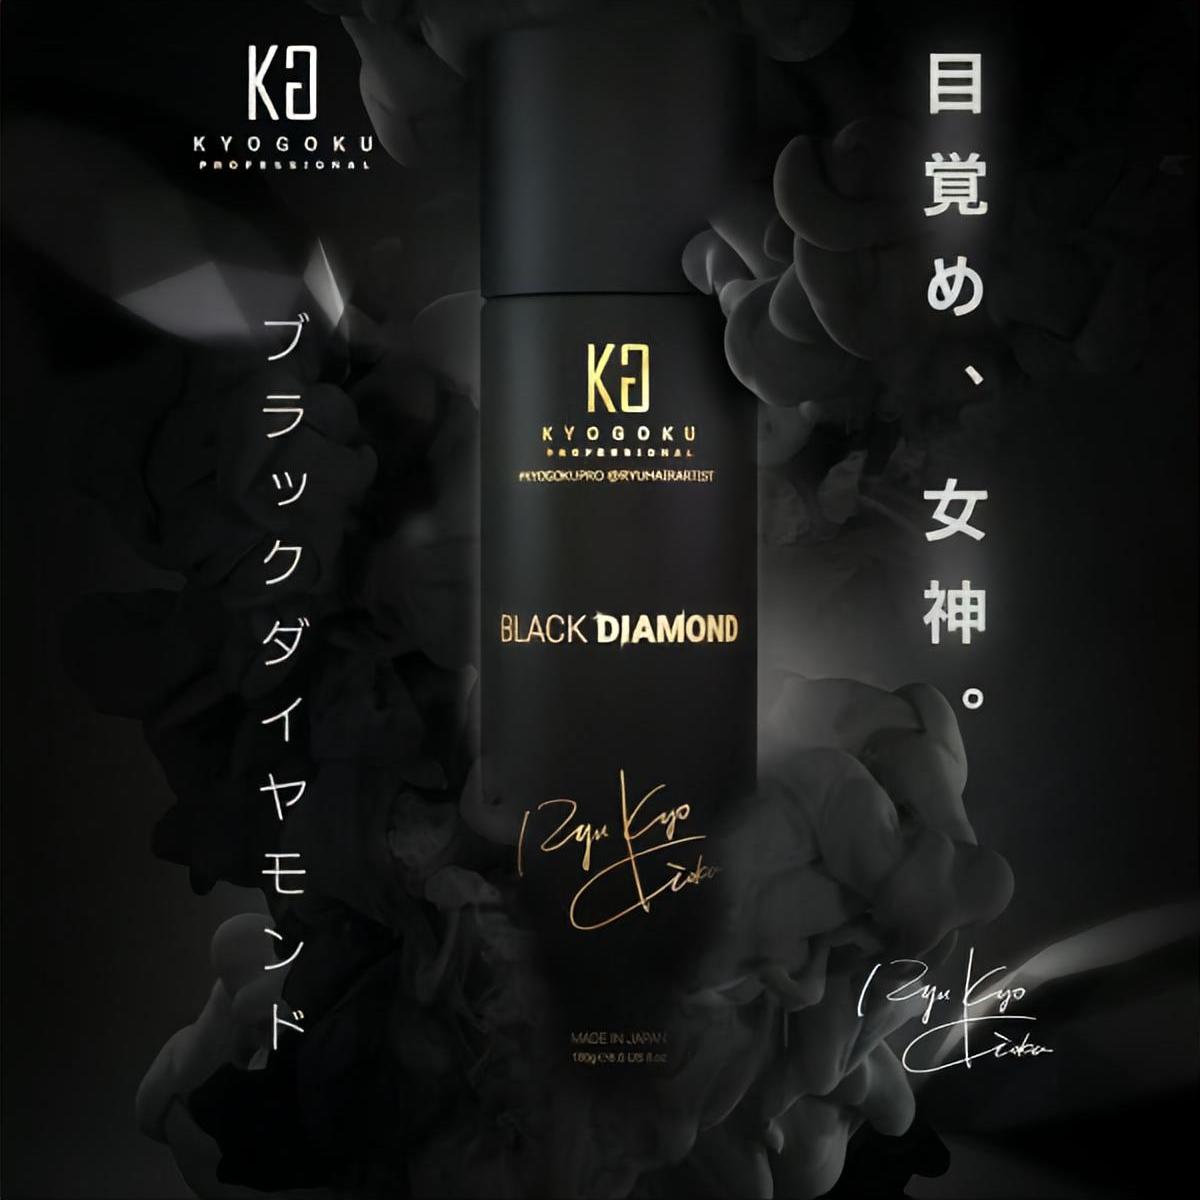 Kyogoku Professional / KYOGOKU ブラックダイヤモンド 180g